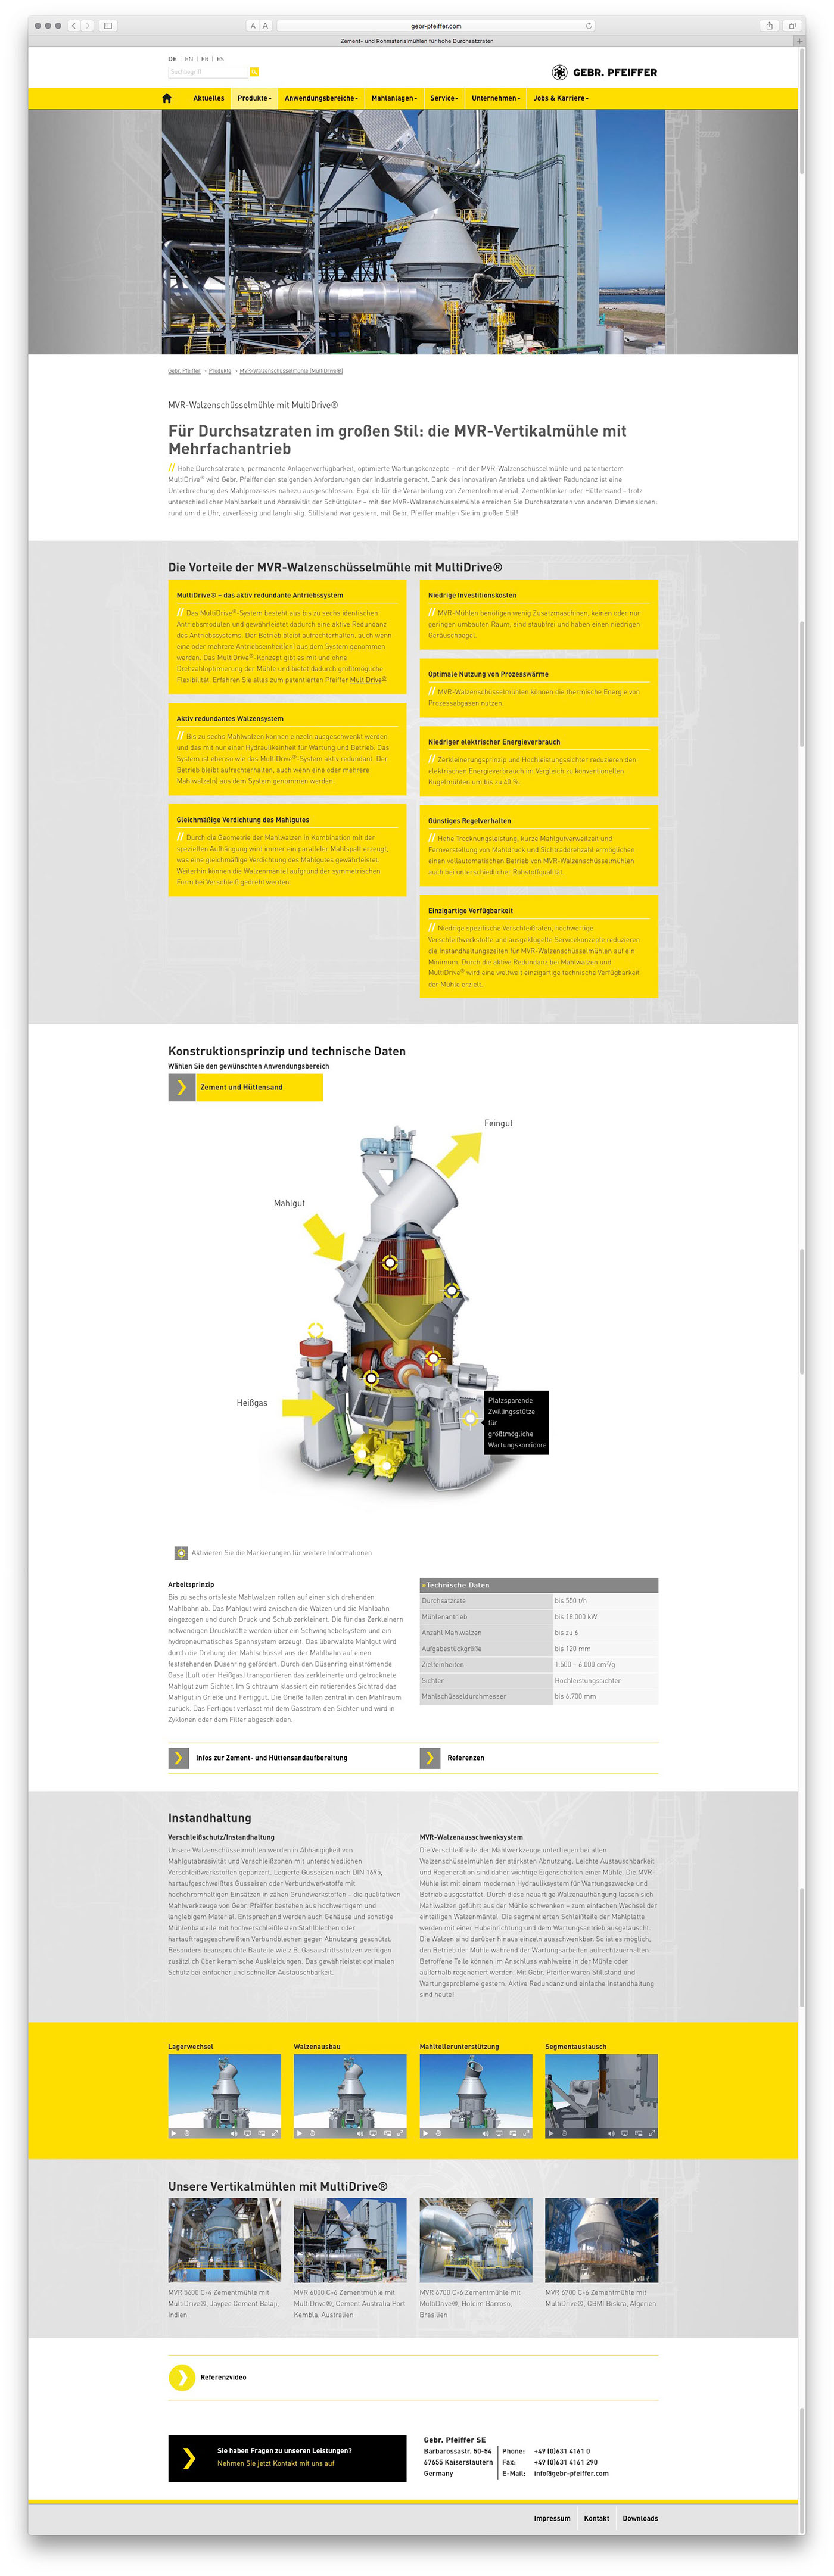 Gebr. Pfeiffer Website relaunch zuk Zink & Kraemer Webdesign